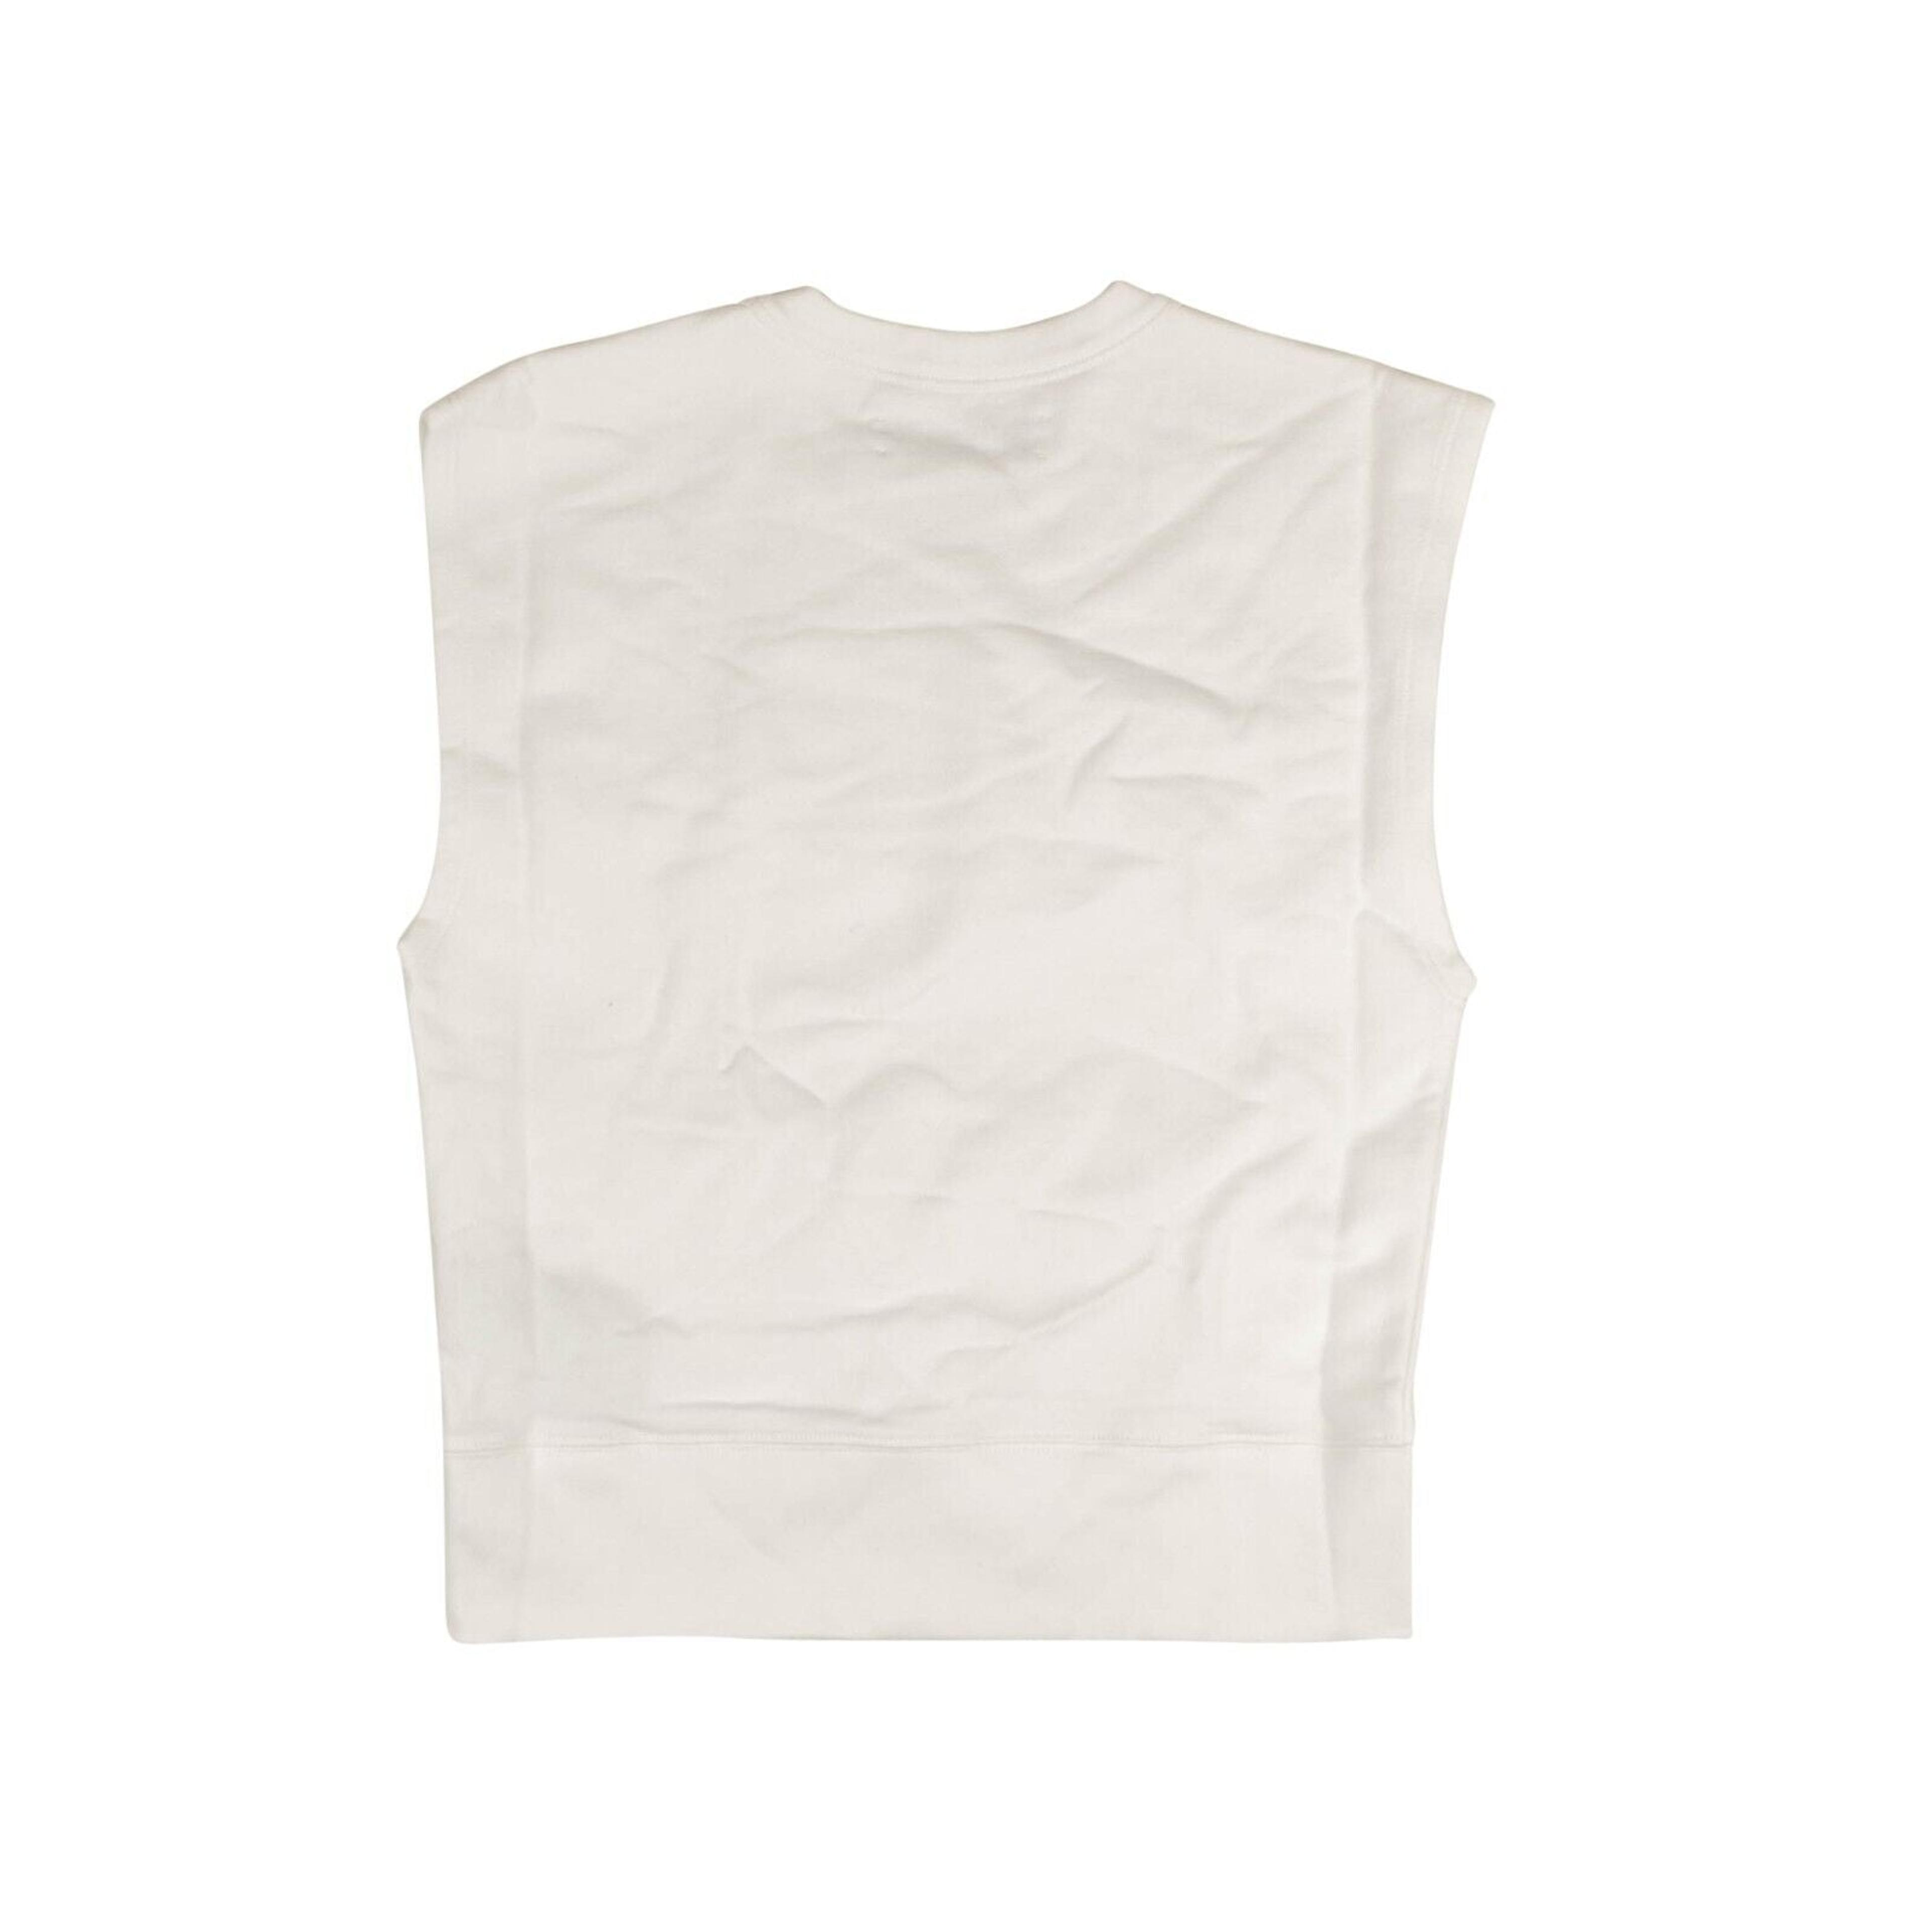 Alternate View 1 of White Crewneck Sleeveless Sweatshirt Vest